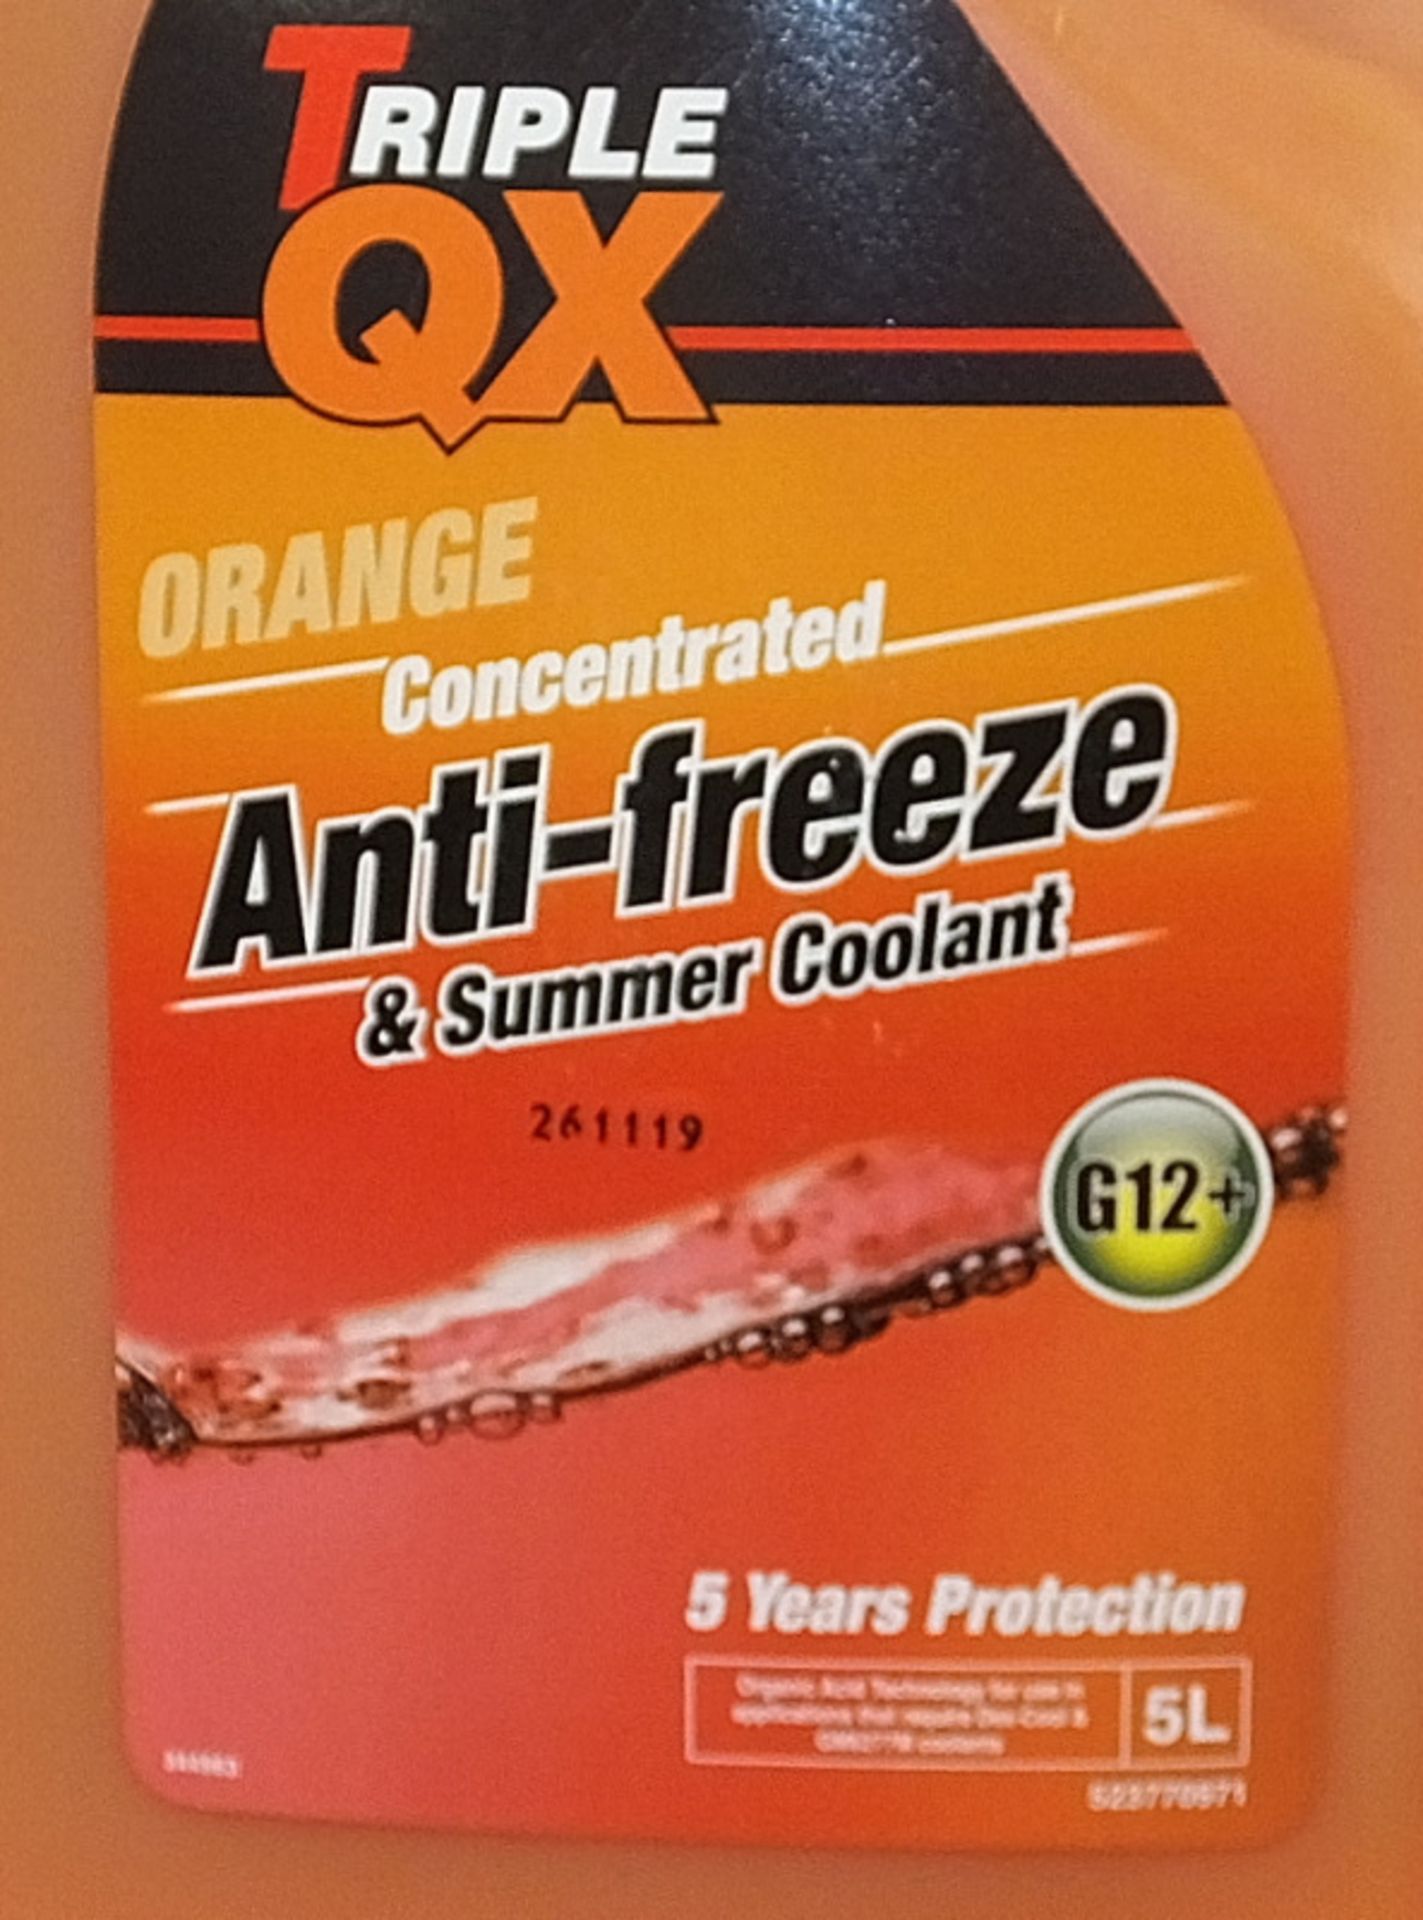 4x Carplan Bluestar Anti-freeze 2L, 1x Triple QX orange concentrated anti-freeze - Image 4 of 4